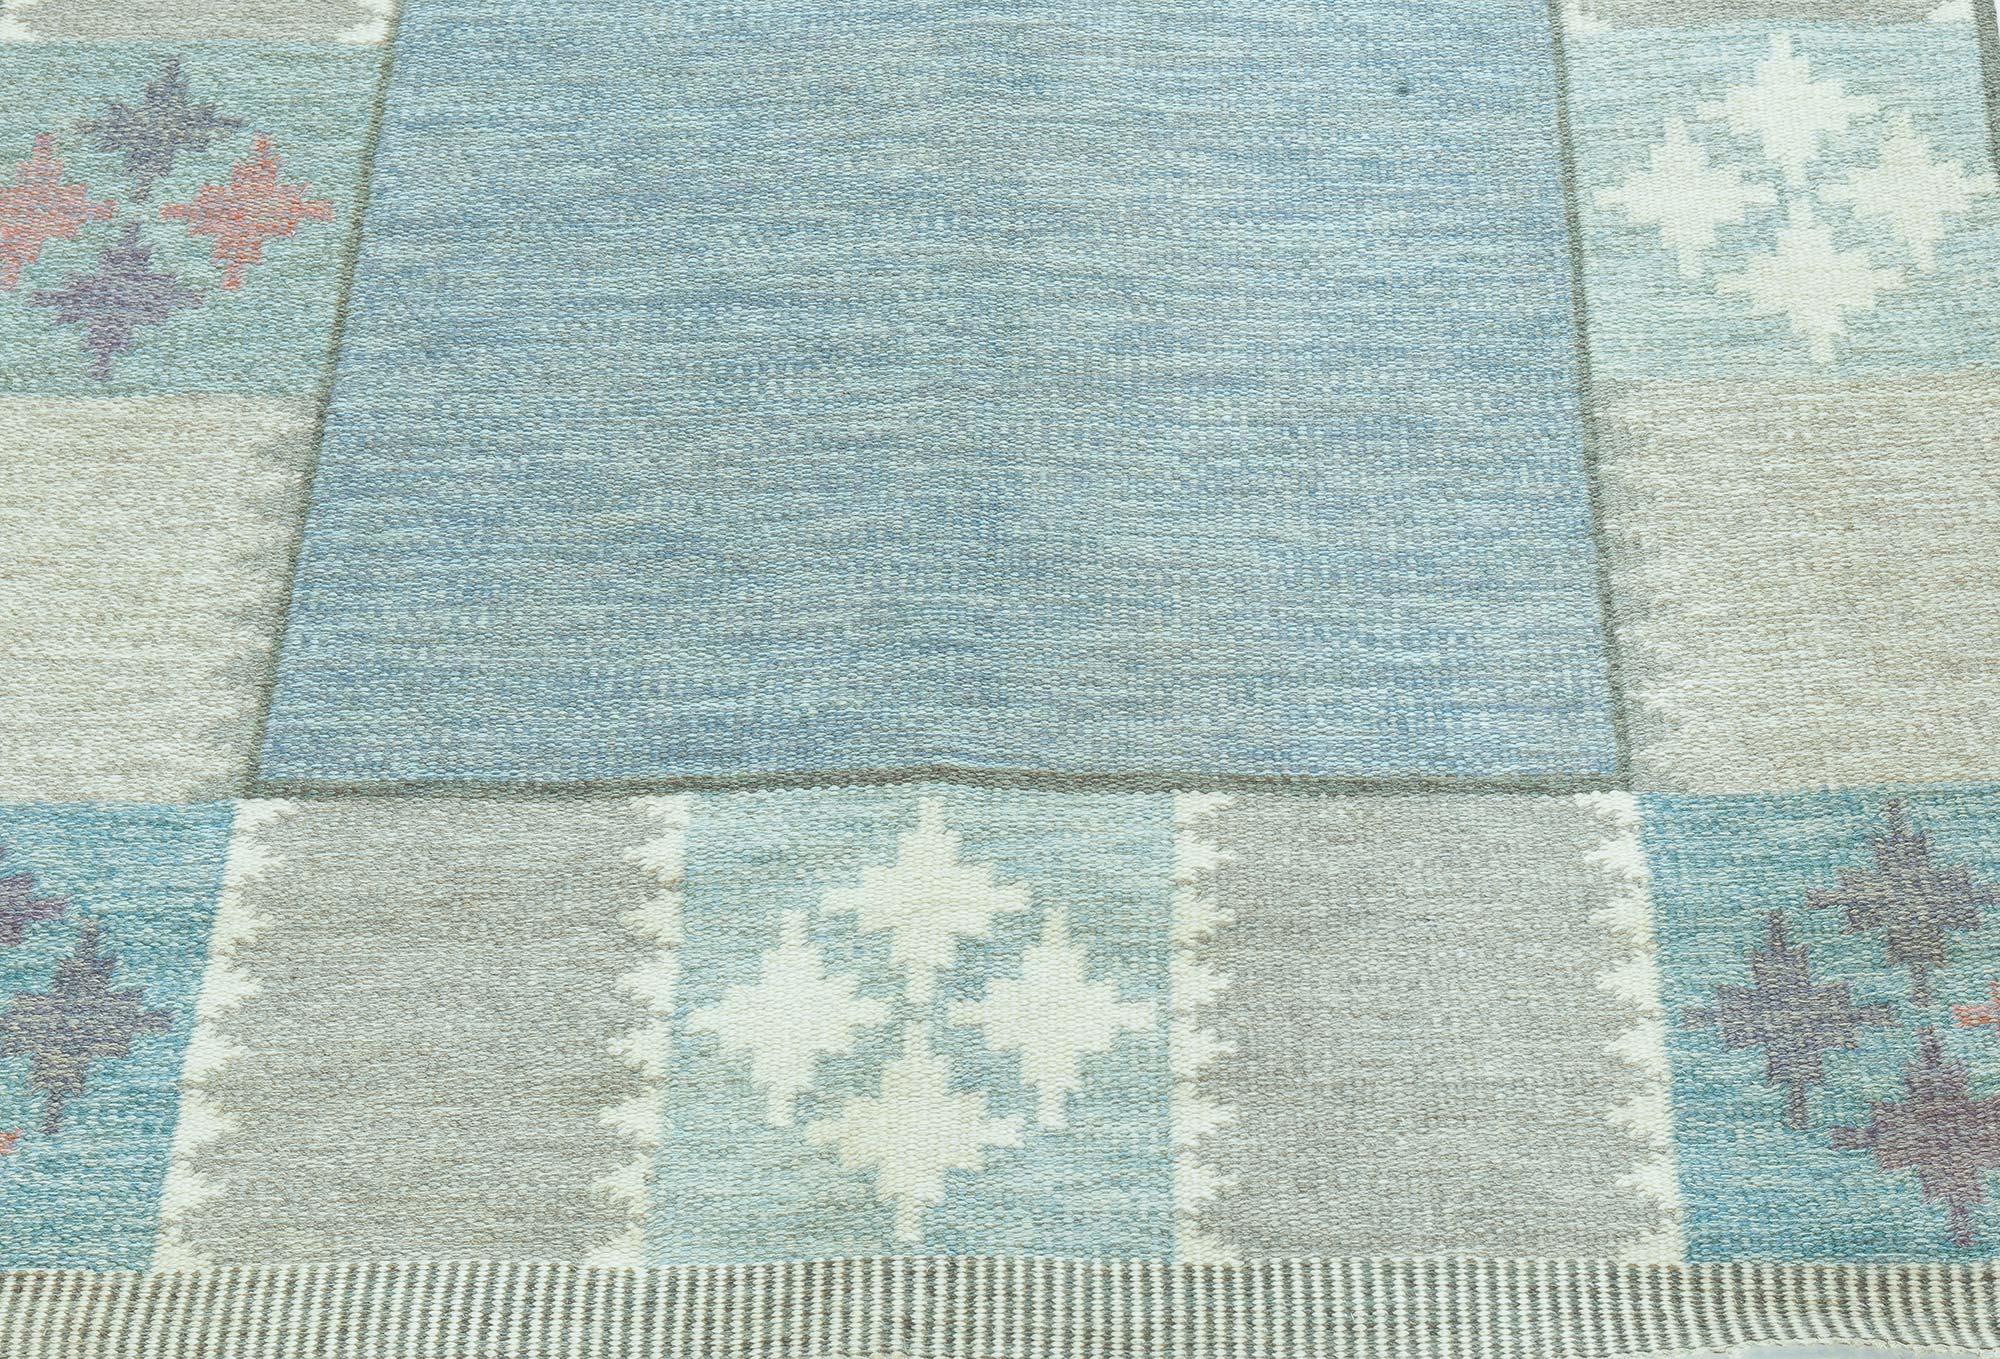 Midcentury Swedish flat woven rug by Bitte Ahlgren (BA)
Size: 5'4